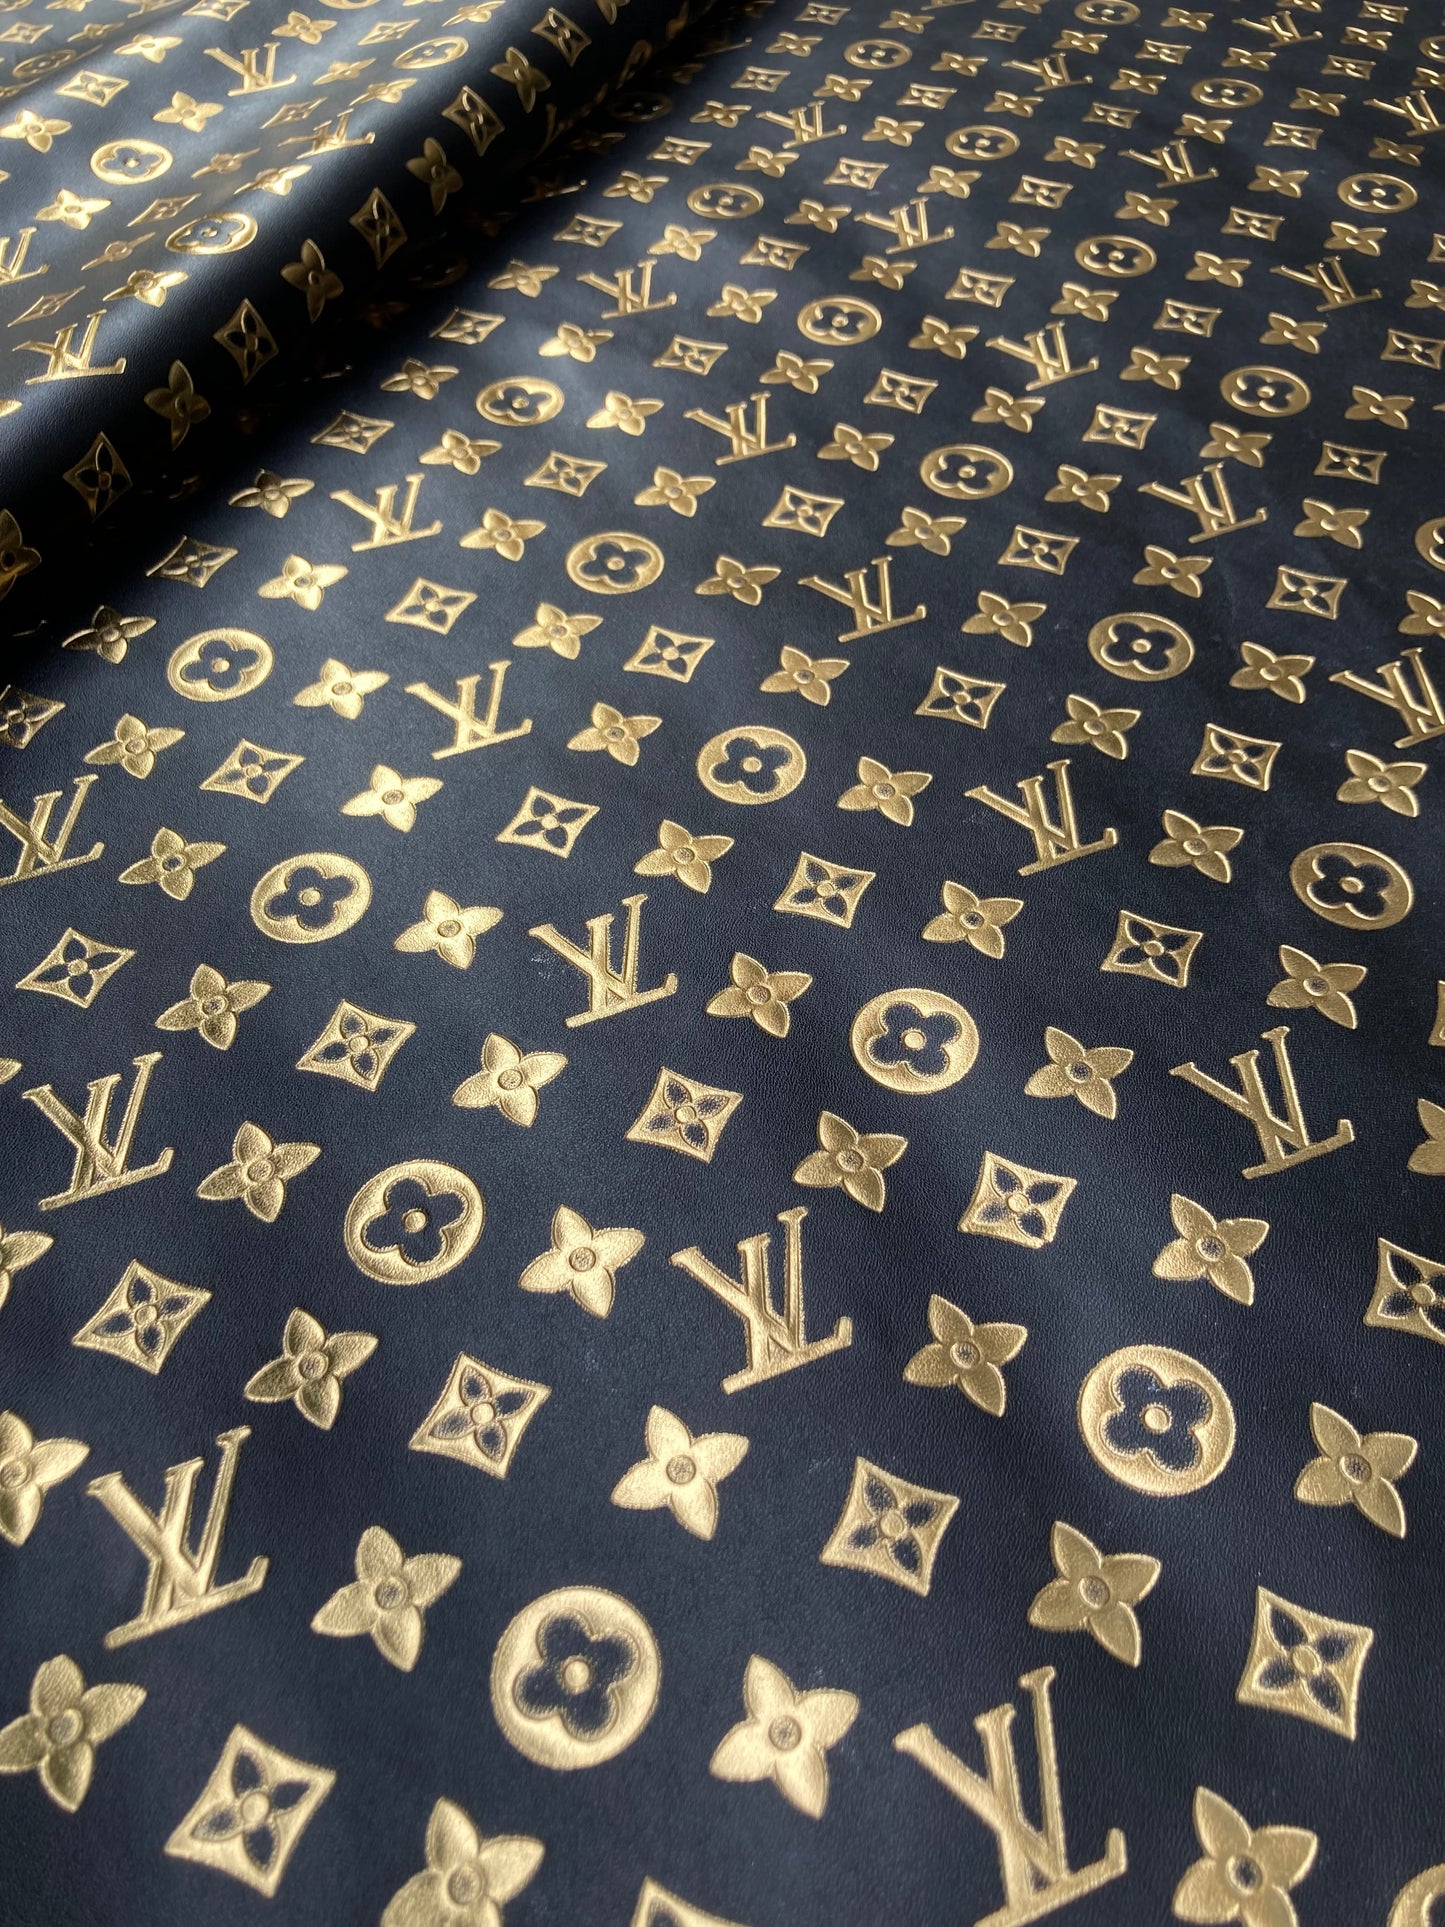 Premium Golden Embossed LV Soft Leather for Custom Sewing DIY